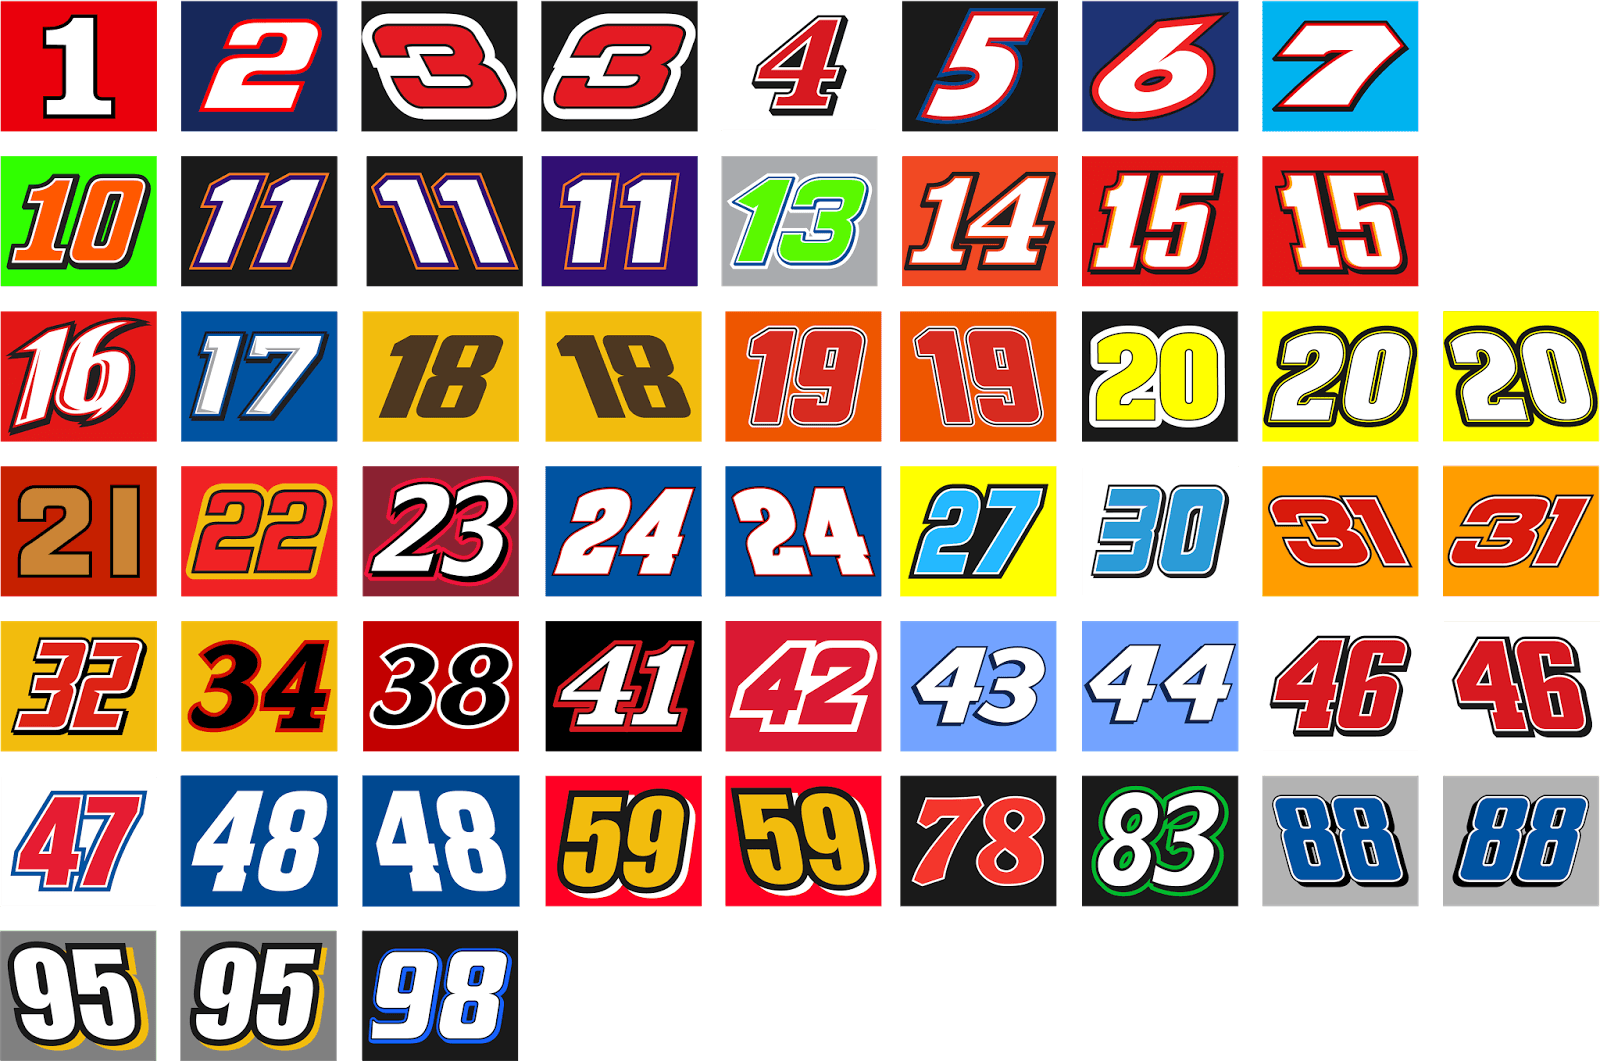 7 Motocross Number Fonts Images Nascar Race Car Numbe - vrogue.co